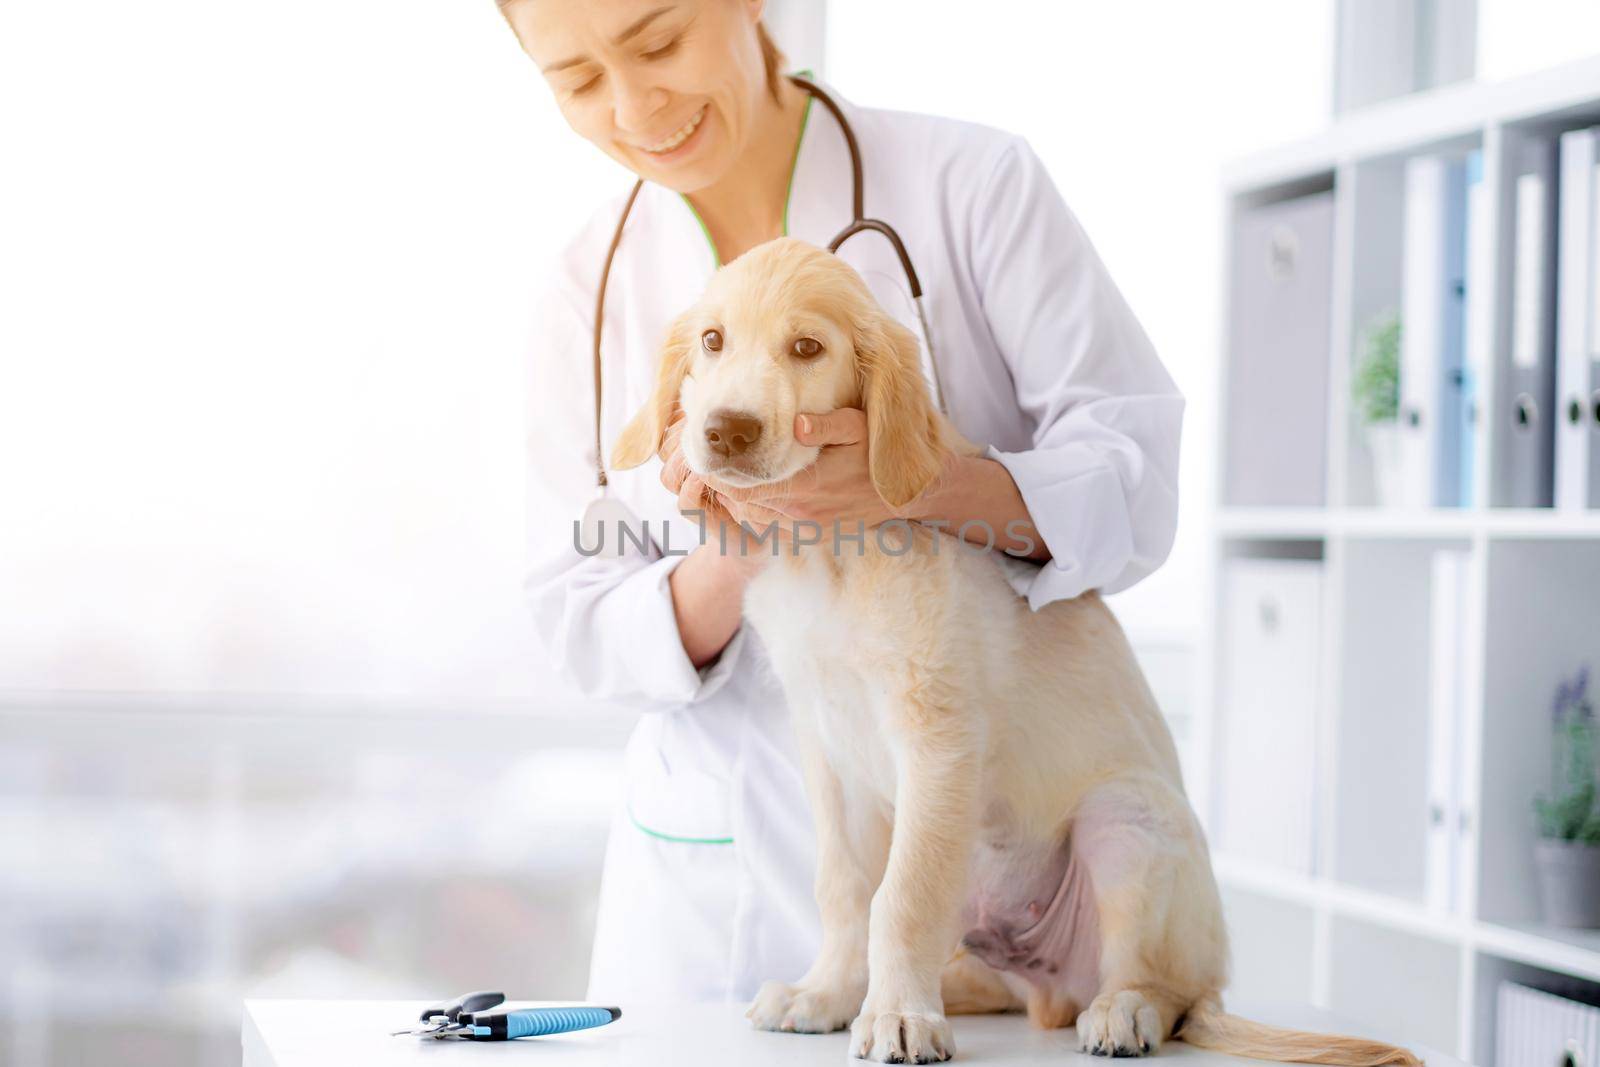 Cute dog at veterinary clinic by GekaSkr